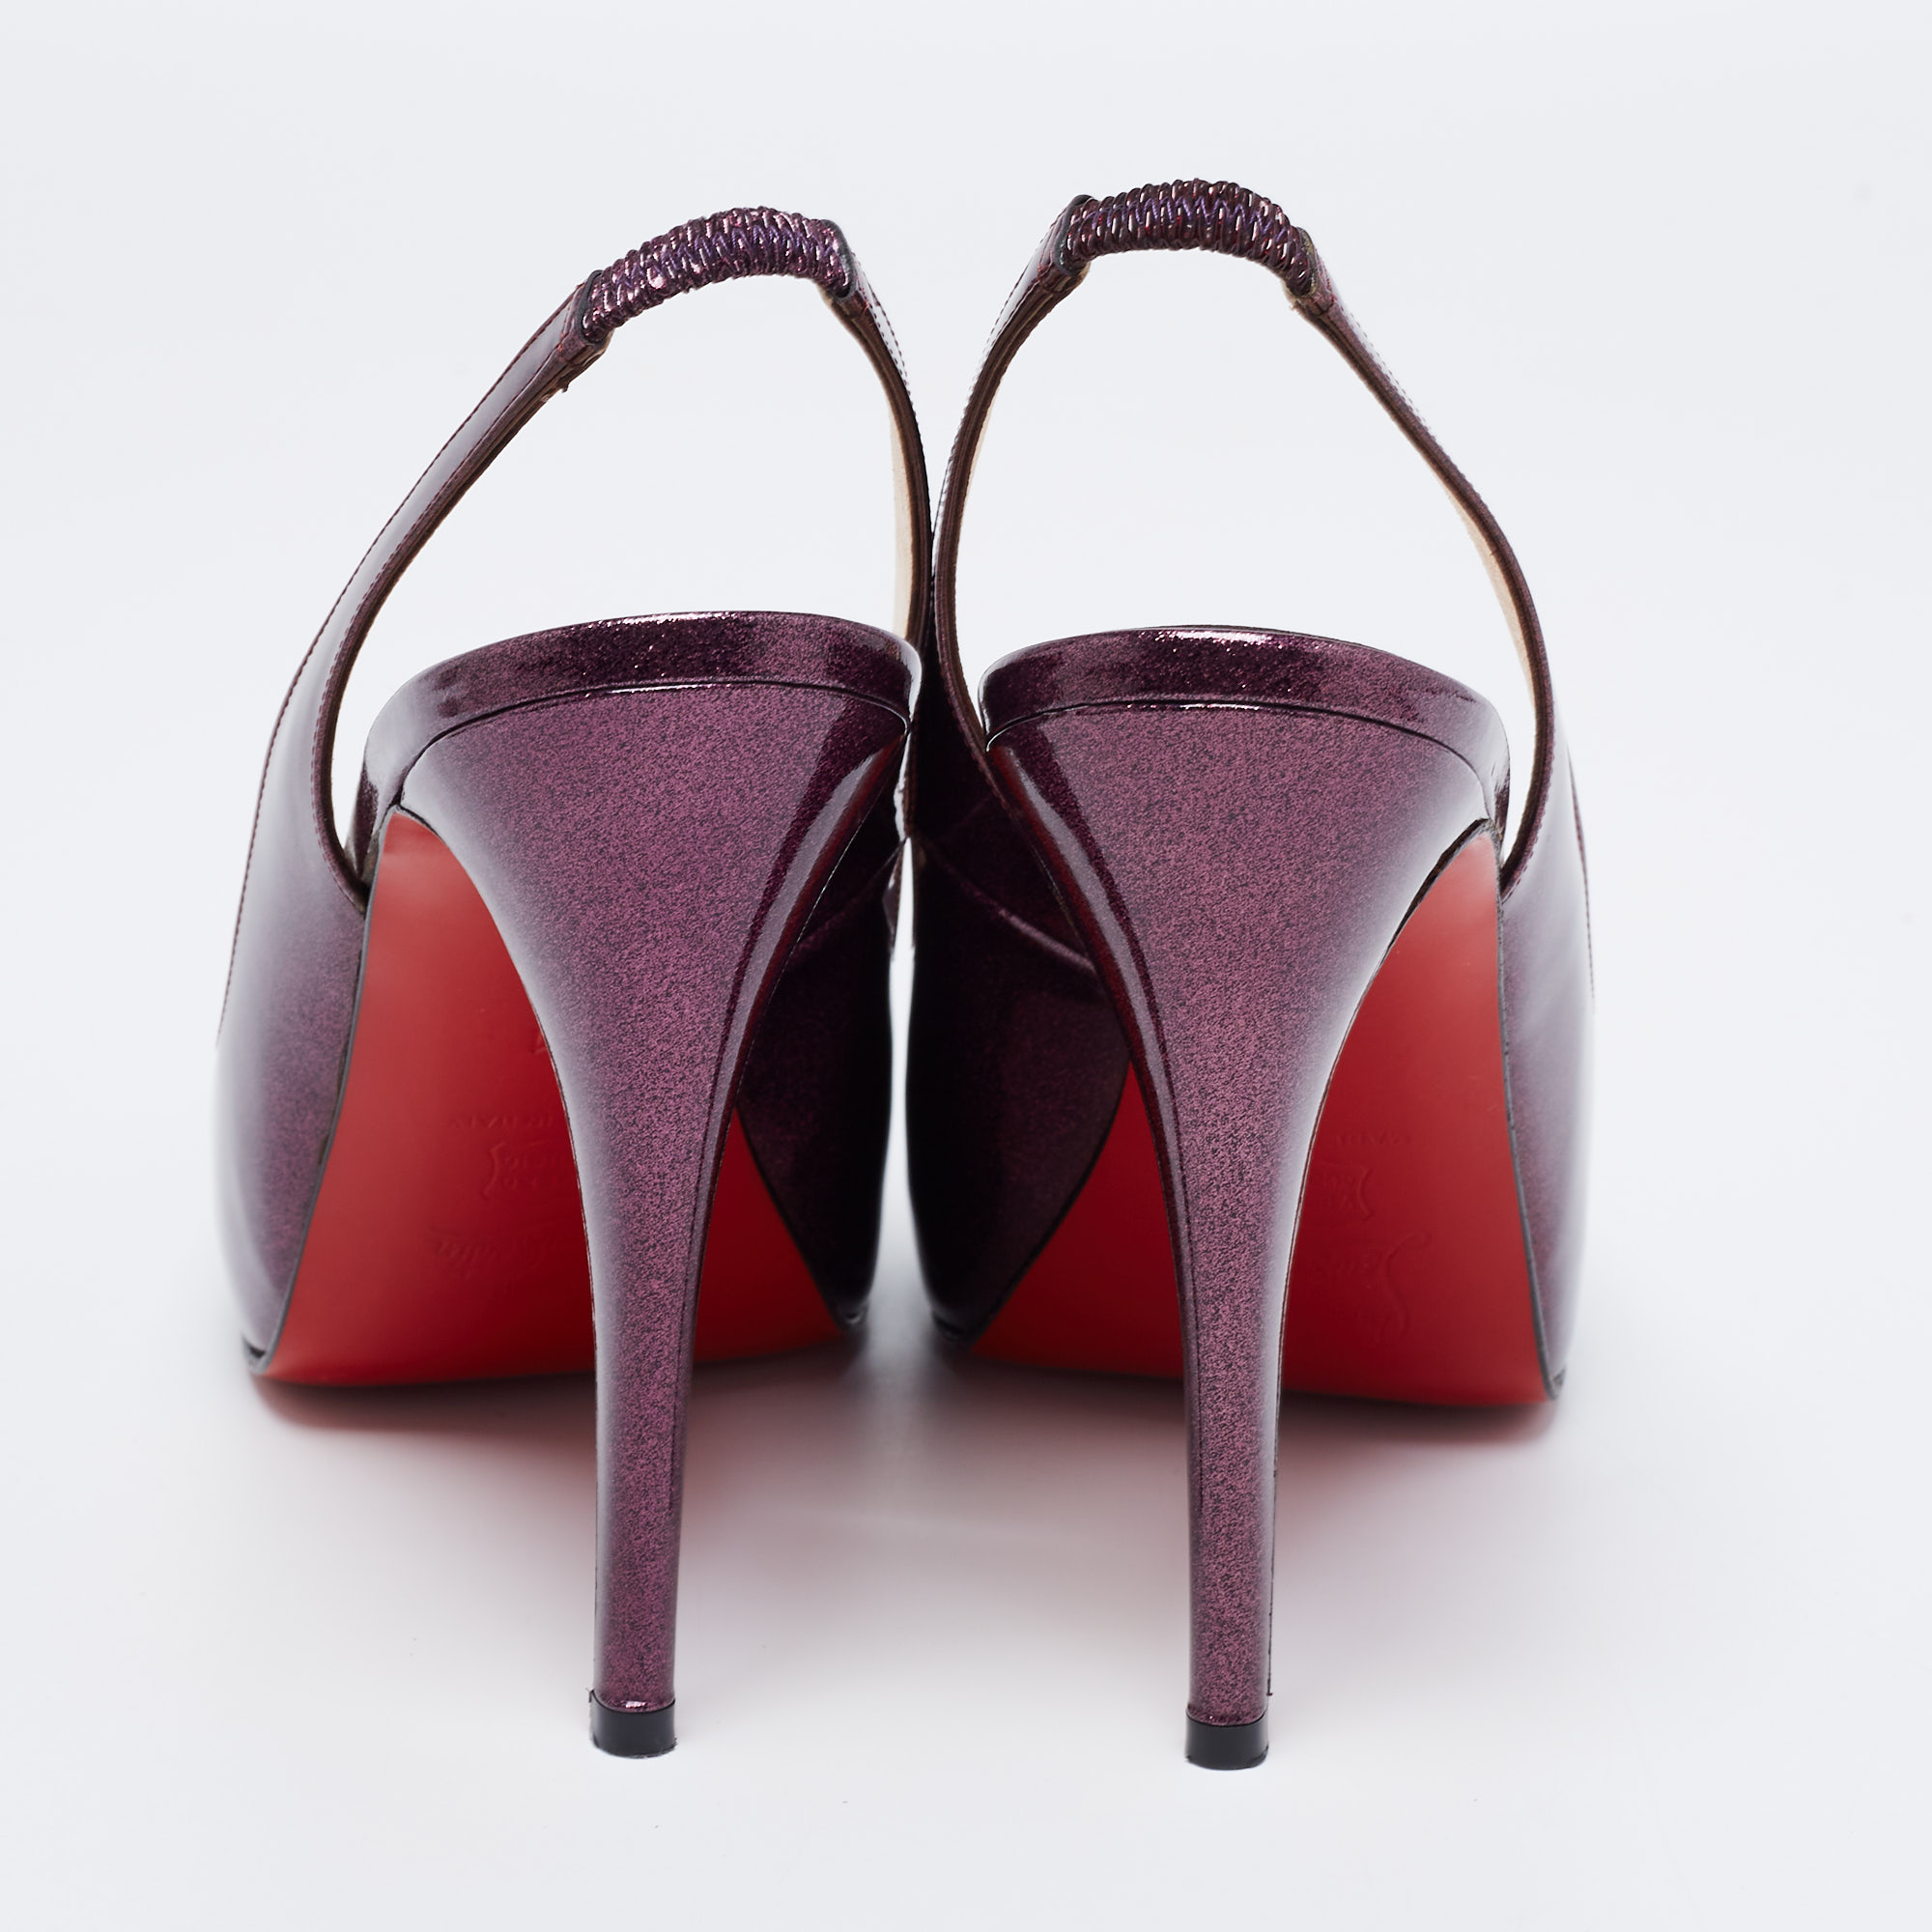 Christian Louboutin Purple Glitter Patent Leather No Prive Peep-Toe Slingback Sandals Size 41